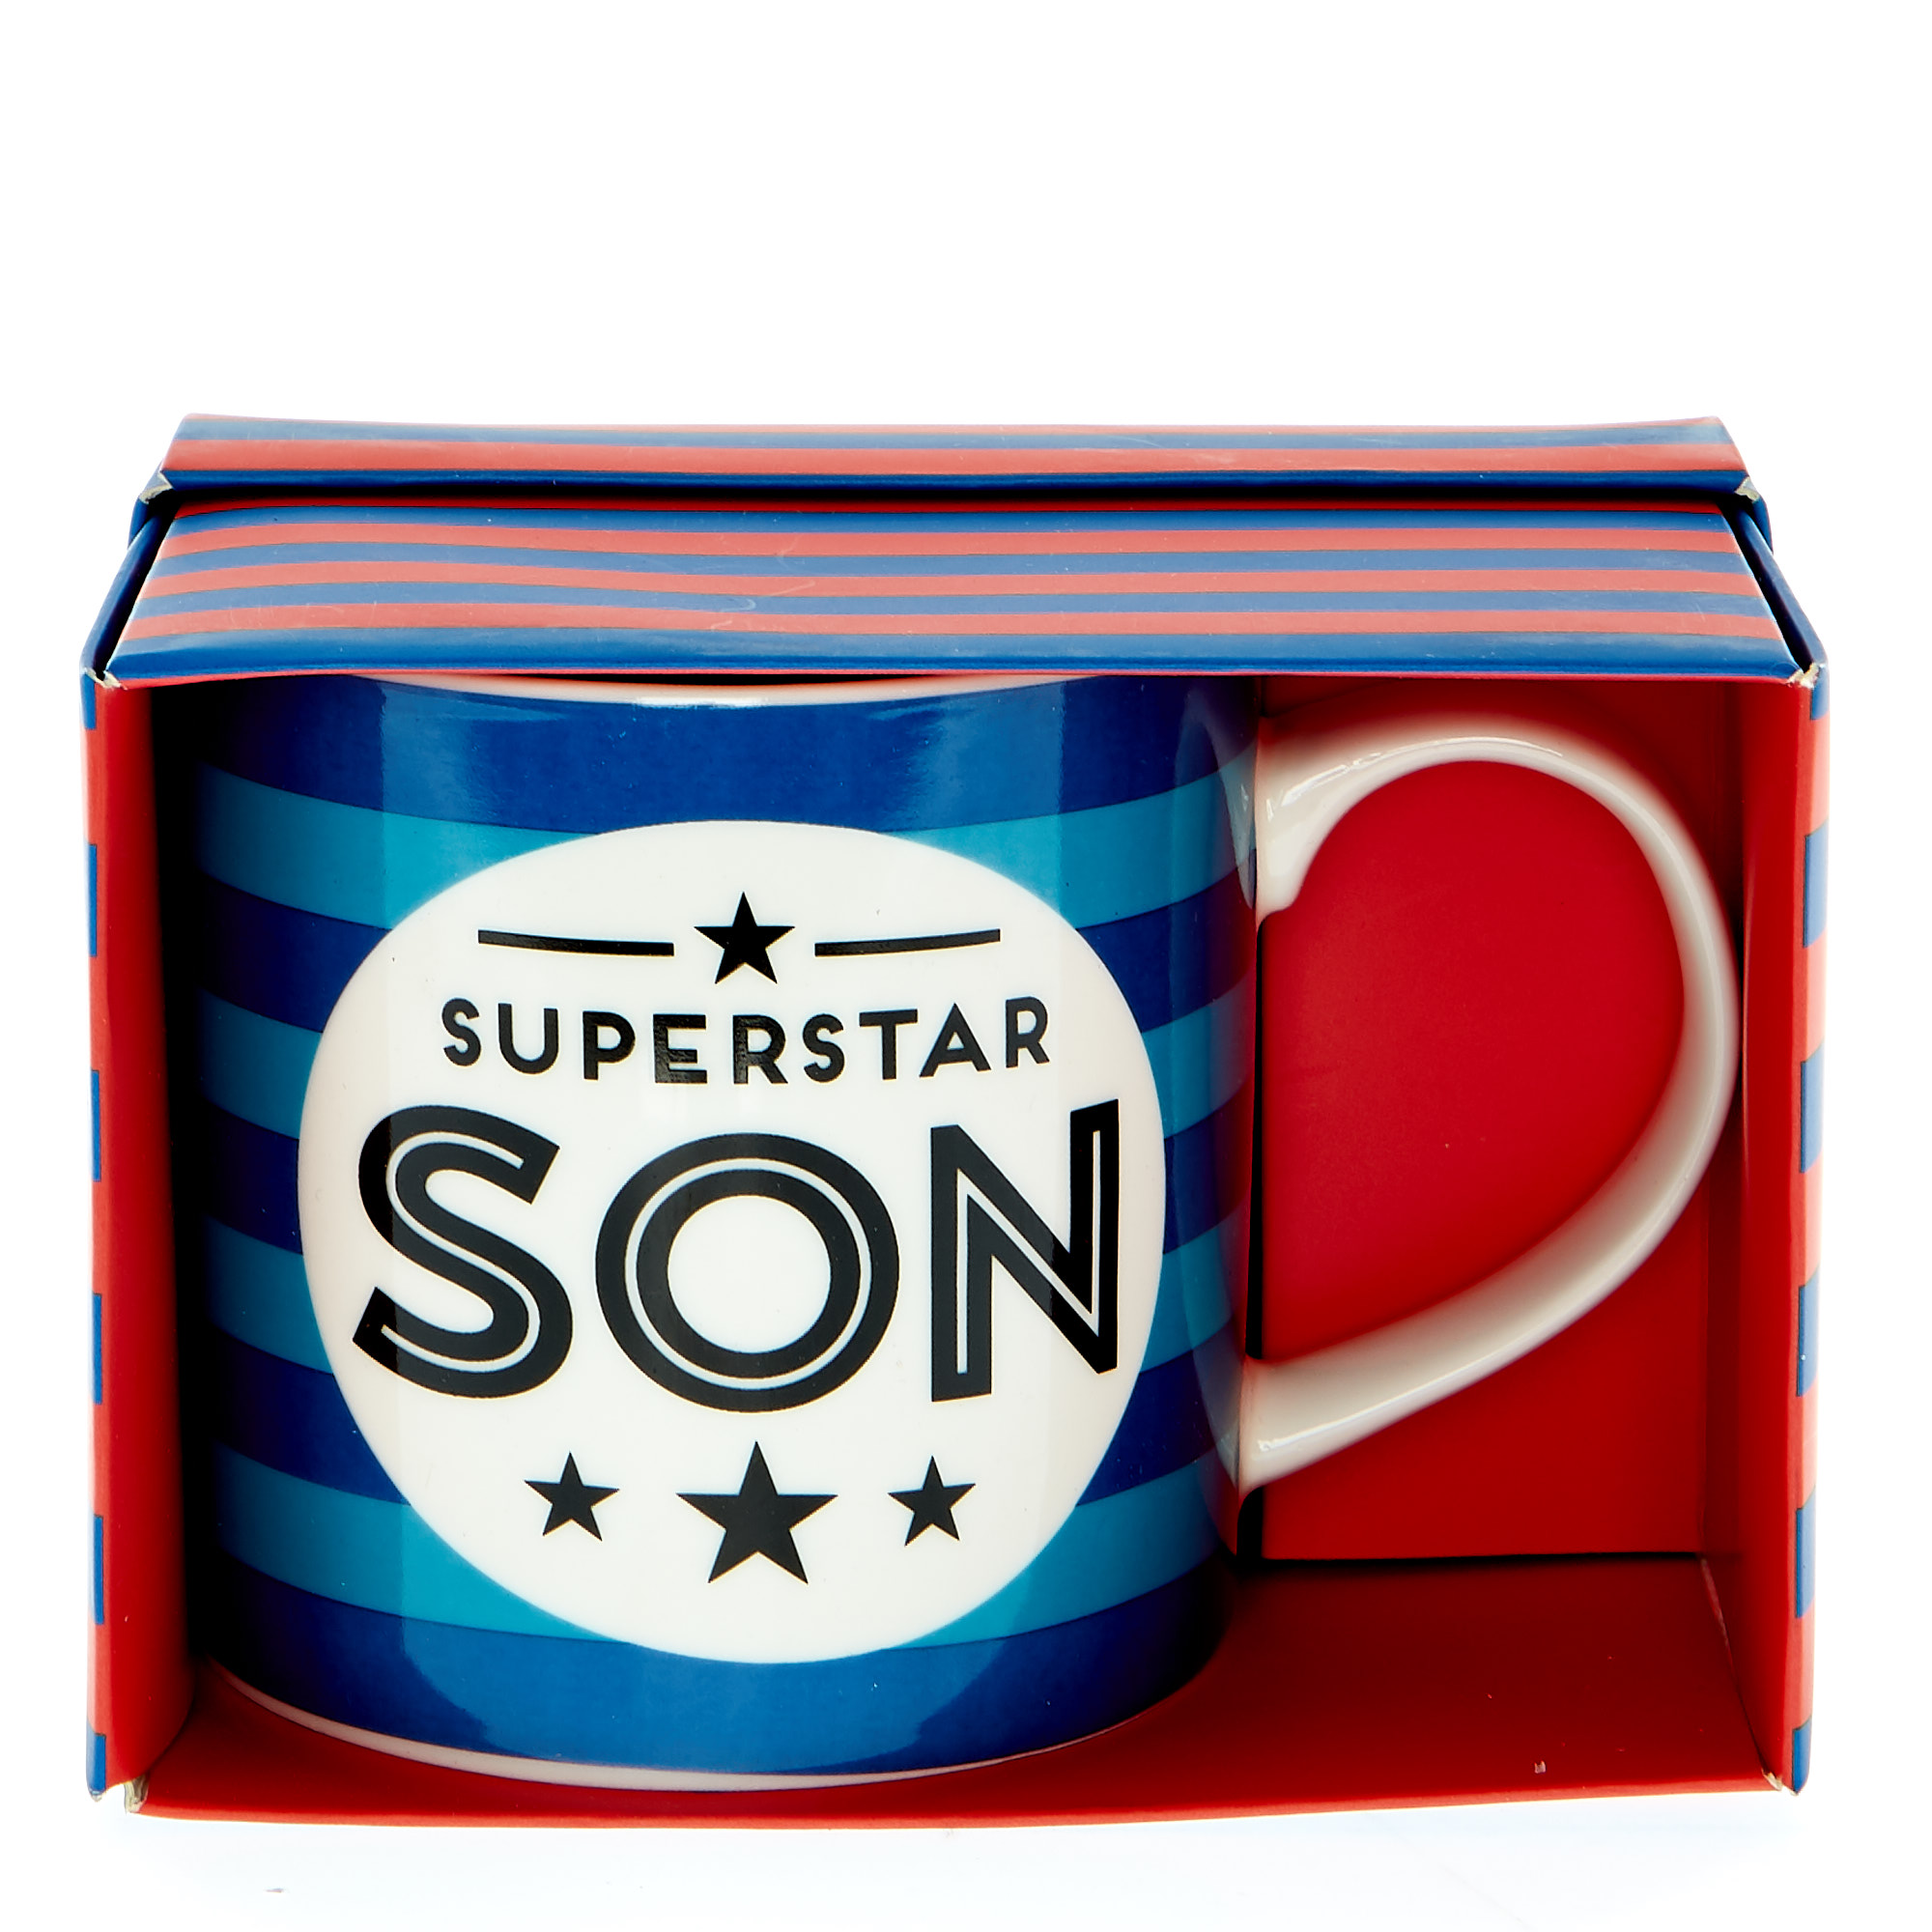 Superstar Son Mug